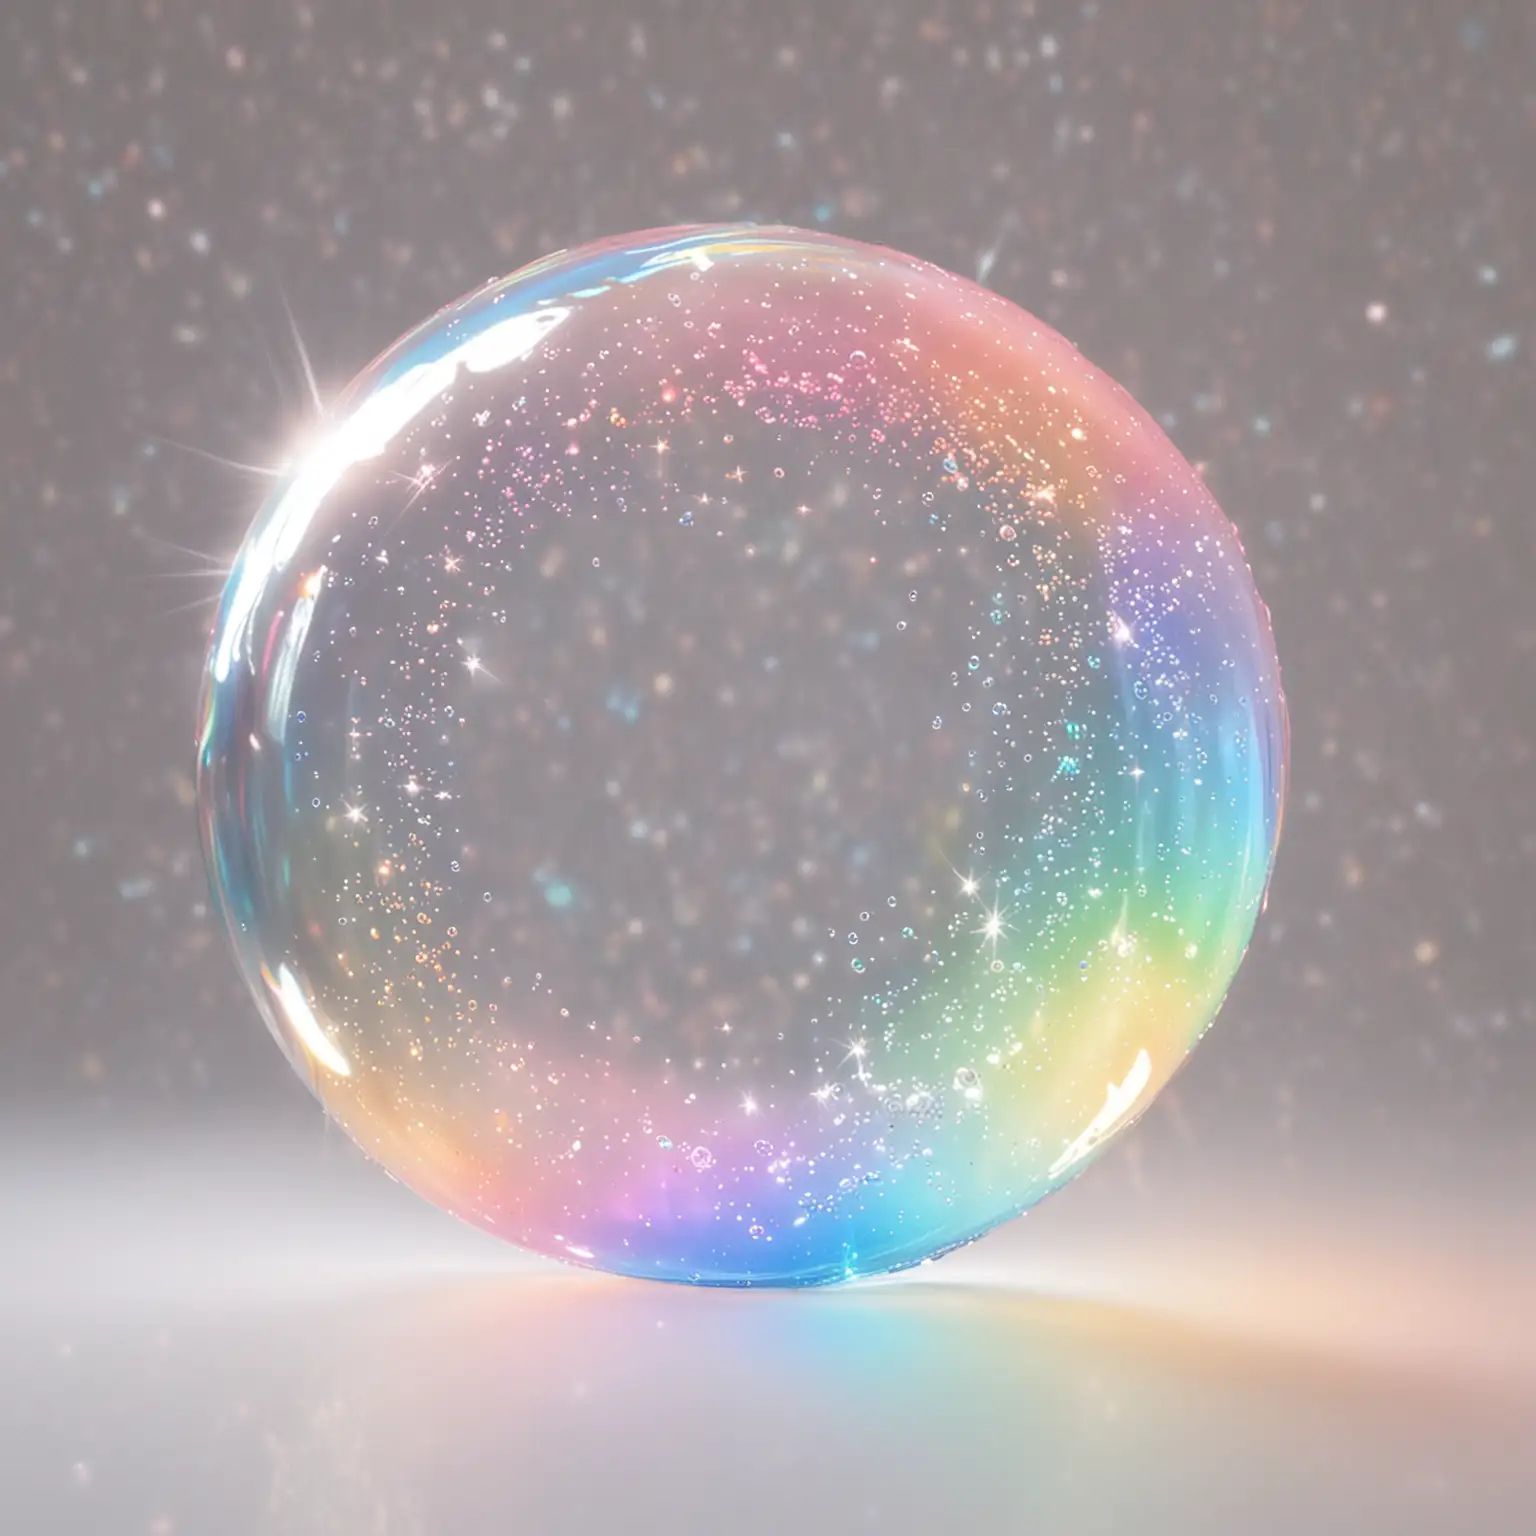 Radiant Pastel Rainbow Bubble Emitting Sparkles and Bright White Light